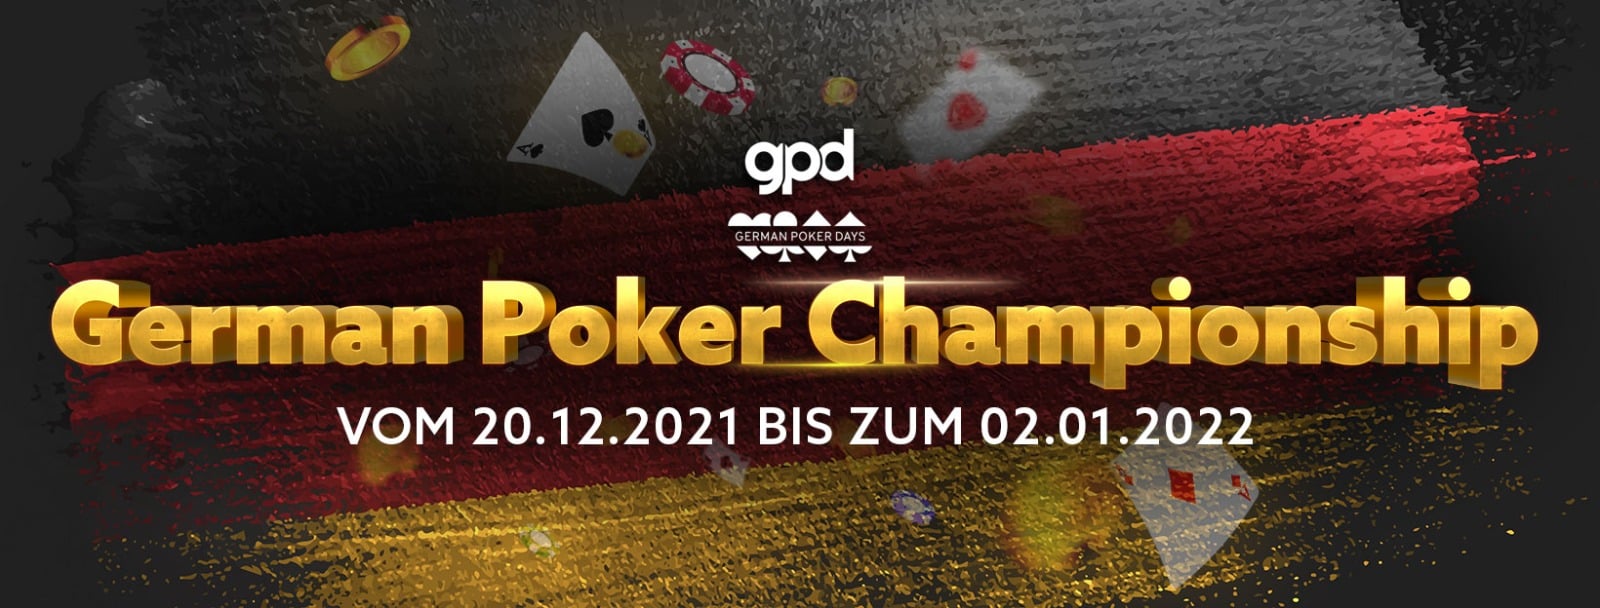 German Poker Championship – Starttag 8